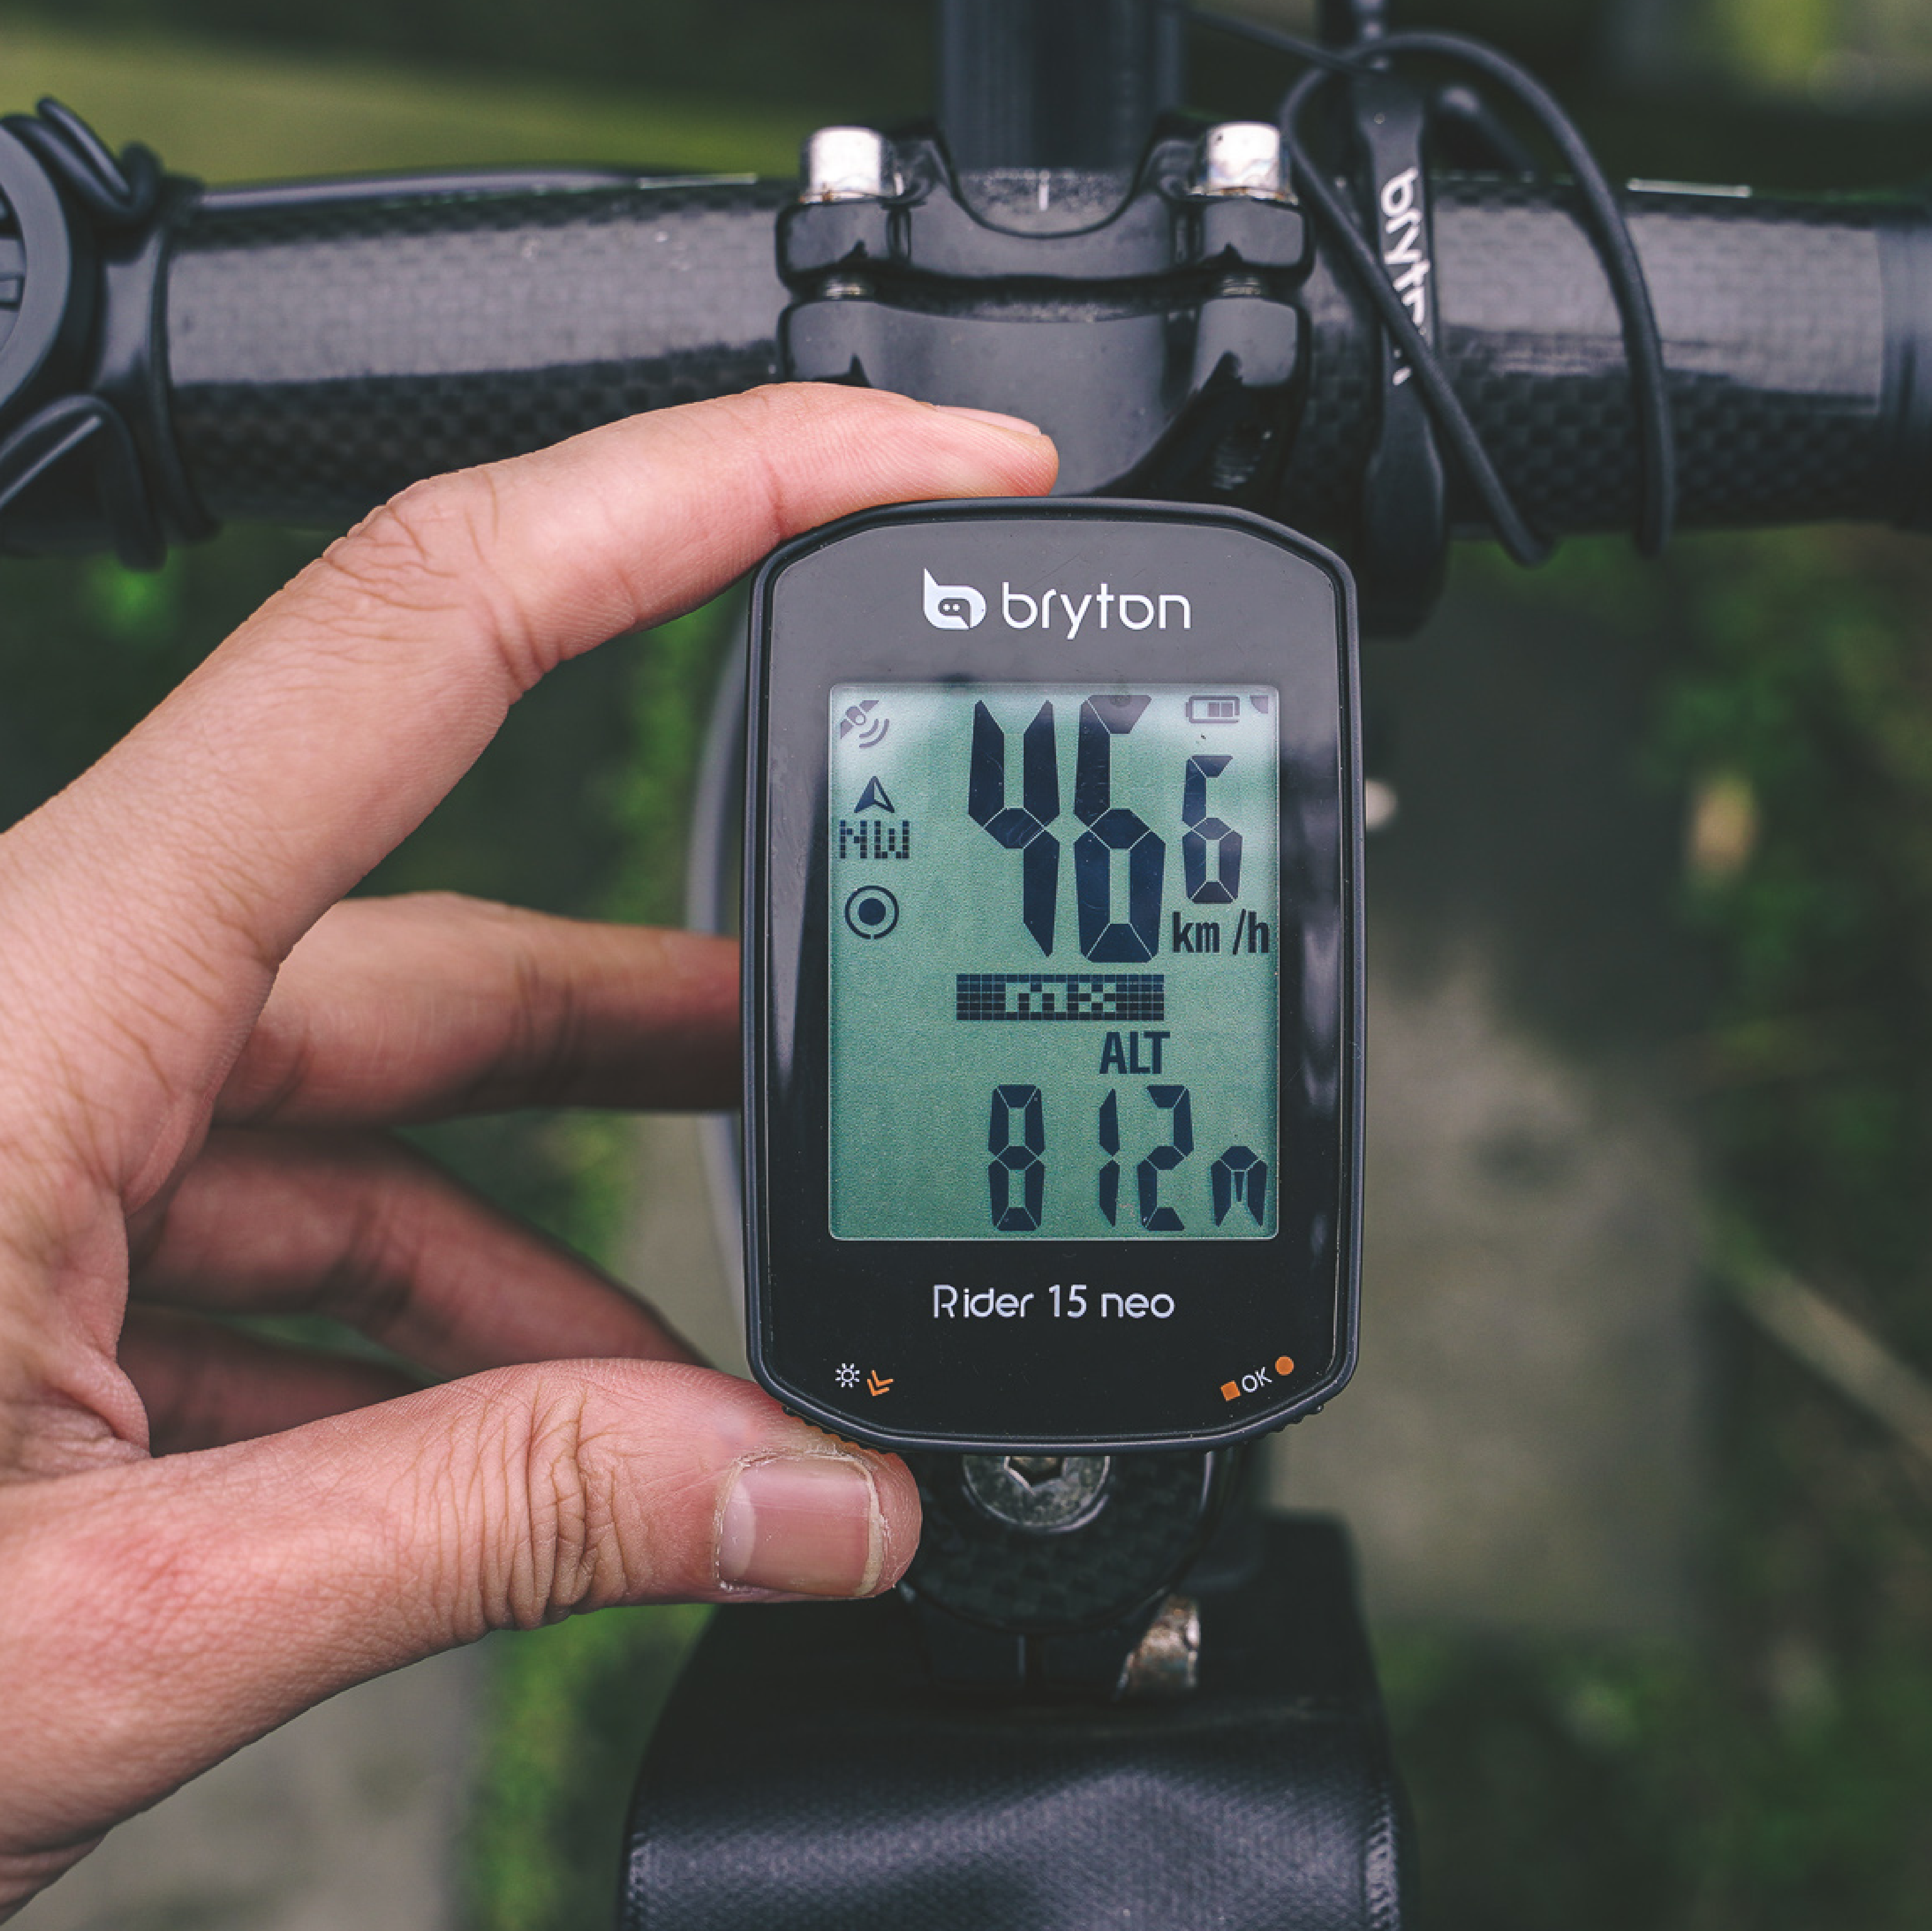 Compteur GPS Bryton Rider 15 néo Villeneuve Cycles